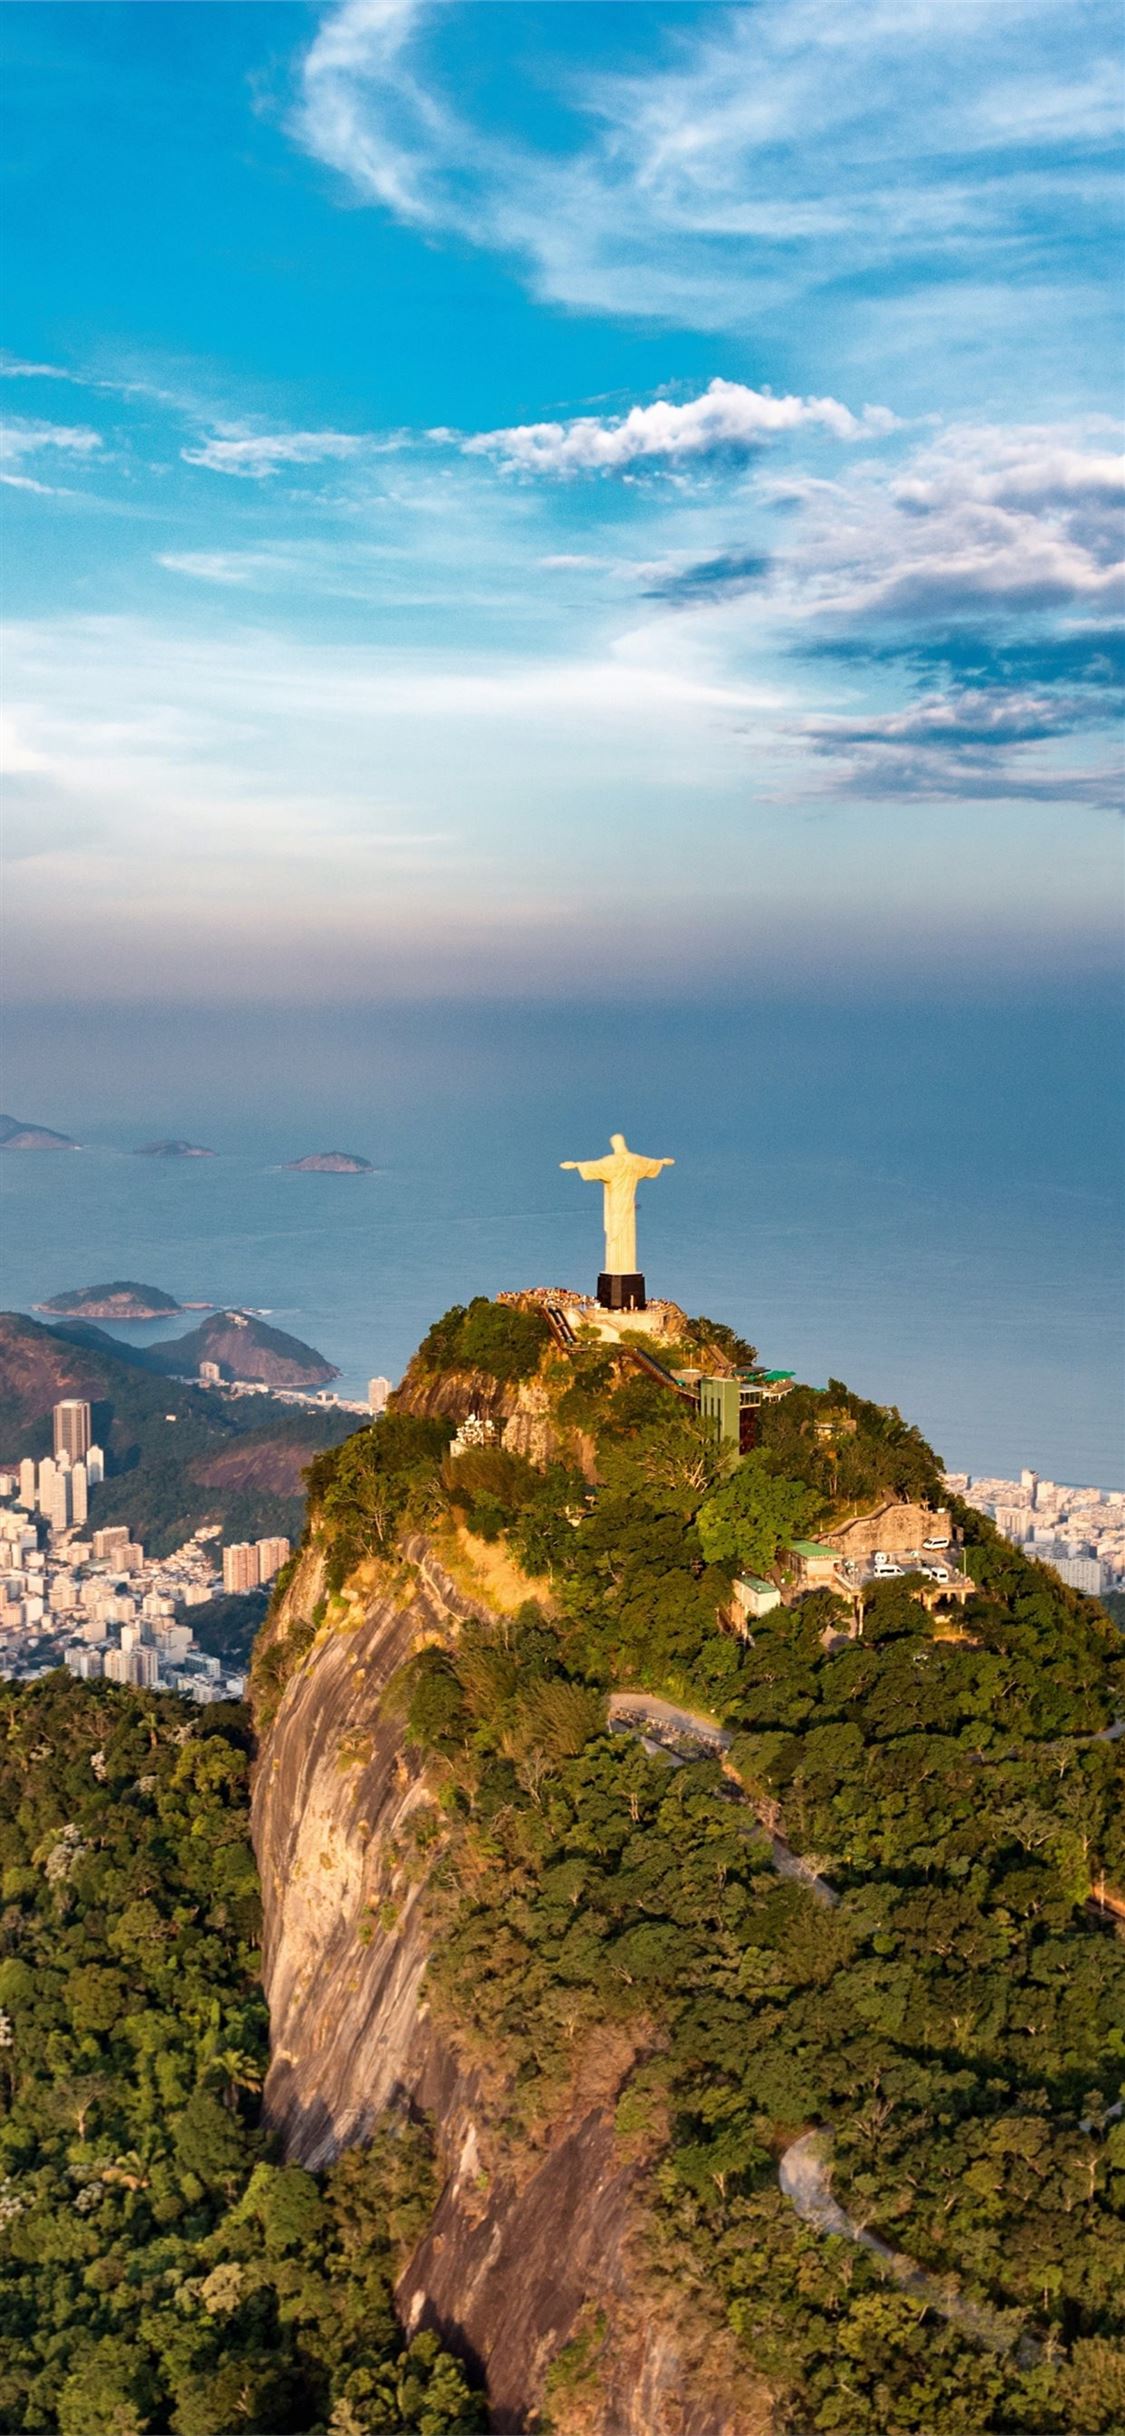 Brazil  Football World Cup iPhone Wallpaper  Splash this   Flickr